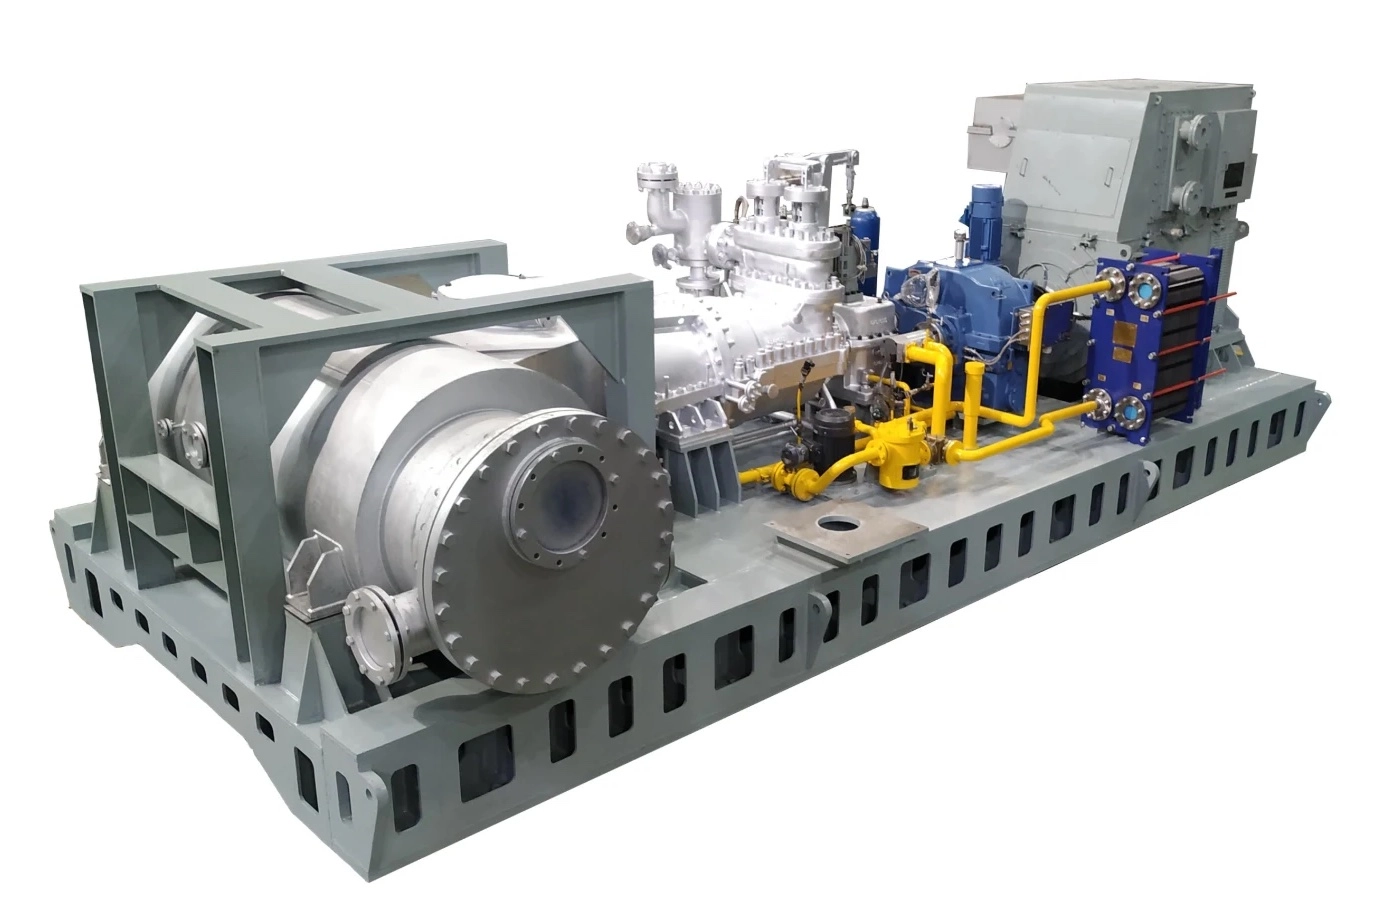 1745-new-steam-turbine-mature-process-16744228634707.jpg